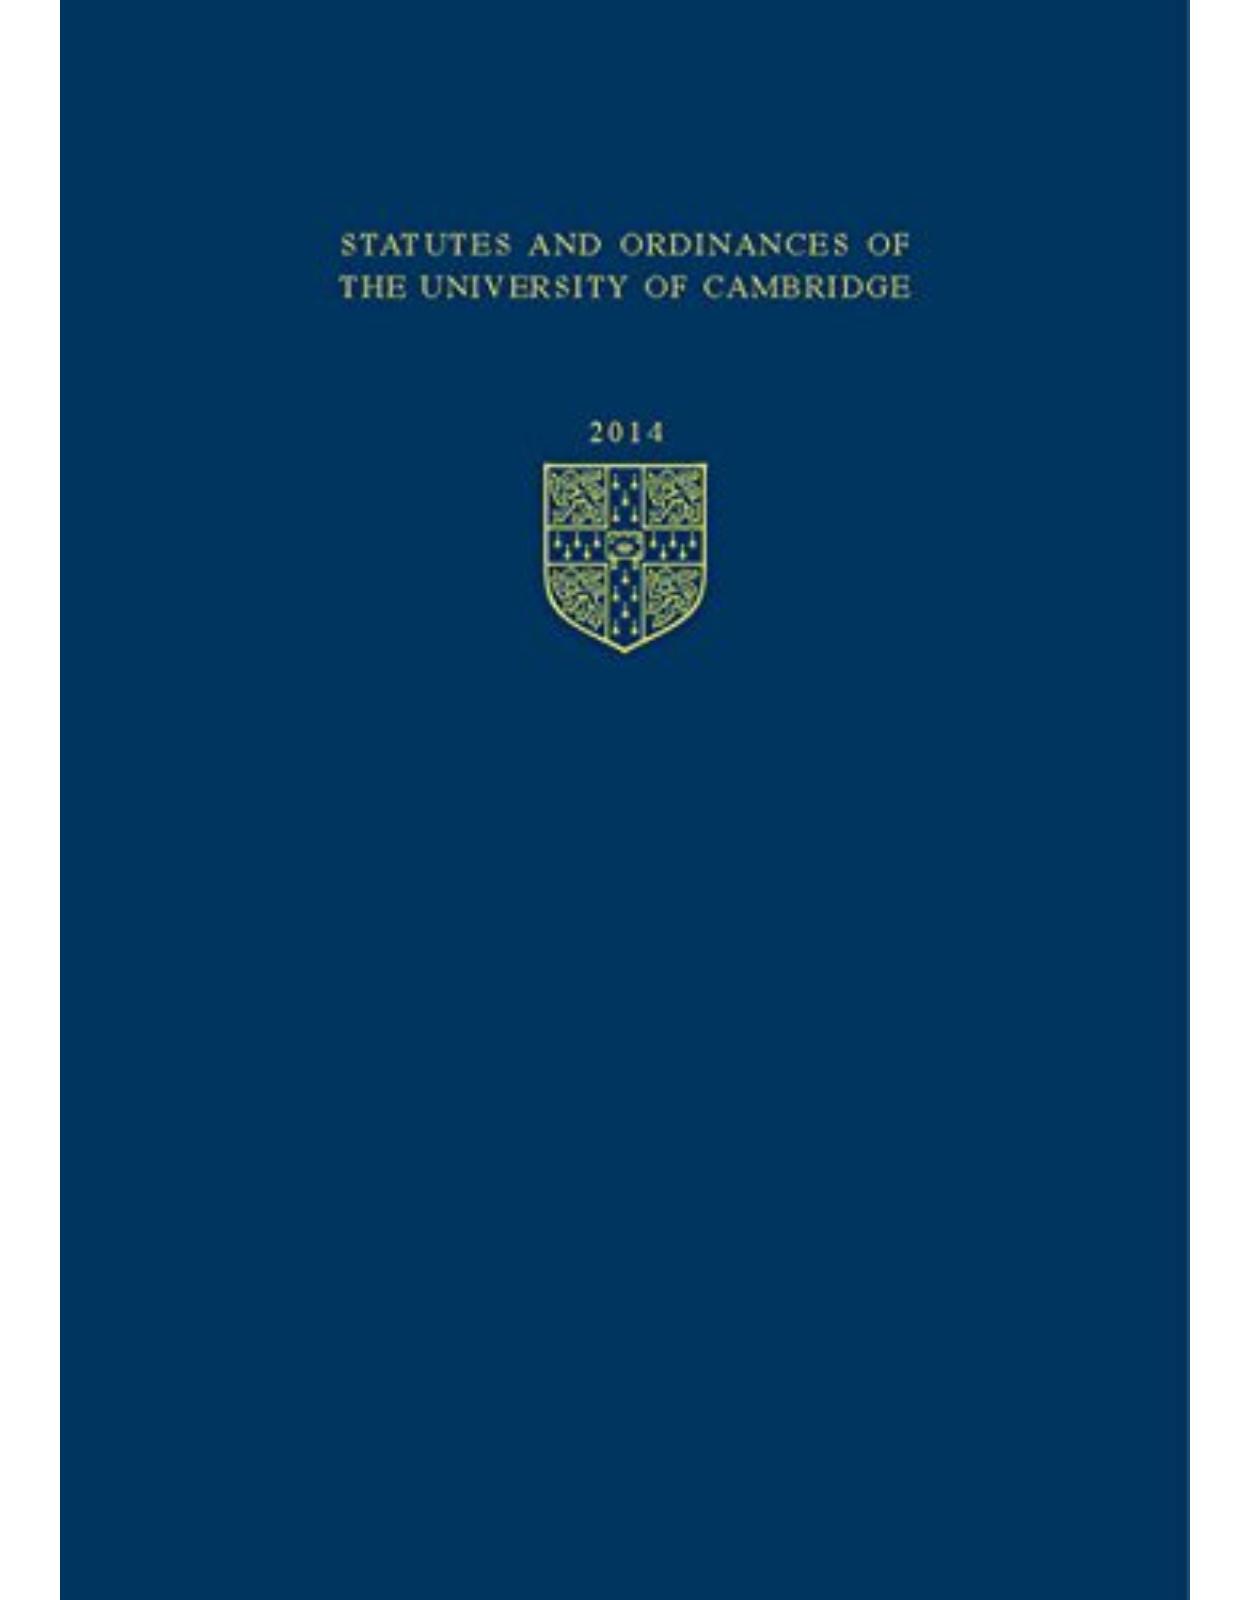 Statutes and Ordinances of the University of Cambridge 2014 (Cambridge University Statutes and Ordinances)